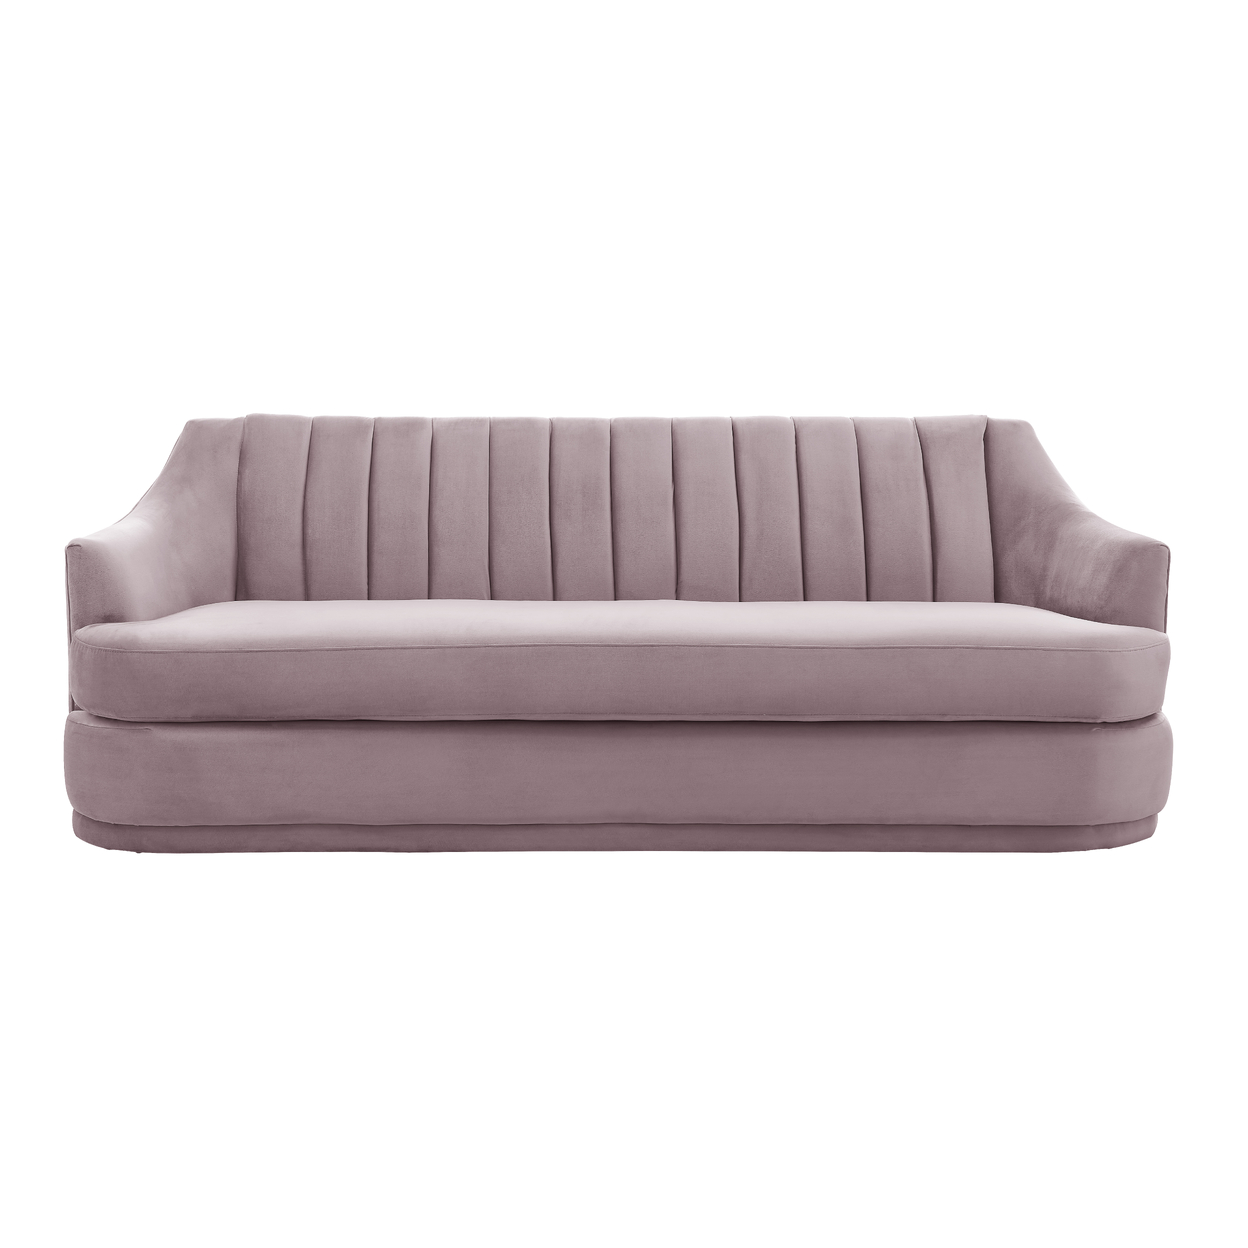 Iconic Home Rosa Sofa Velvet Upholstered Single Cushion Seat Vertical Channel Quilted Back Platform Base Design - Taupe